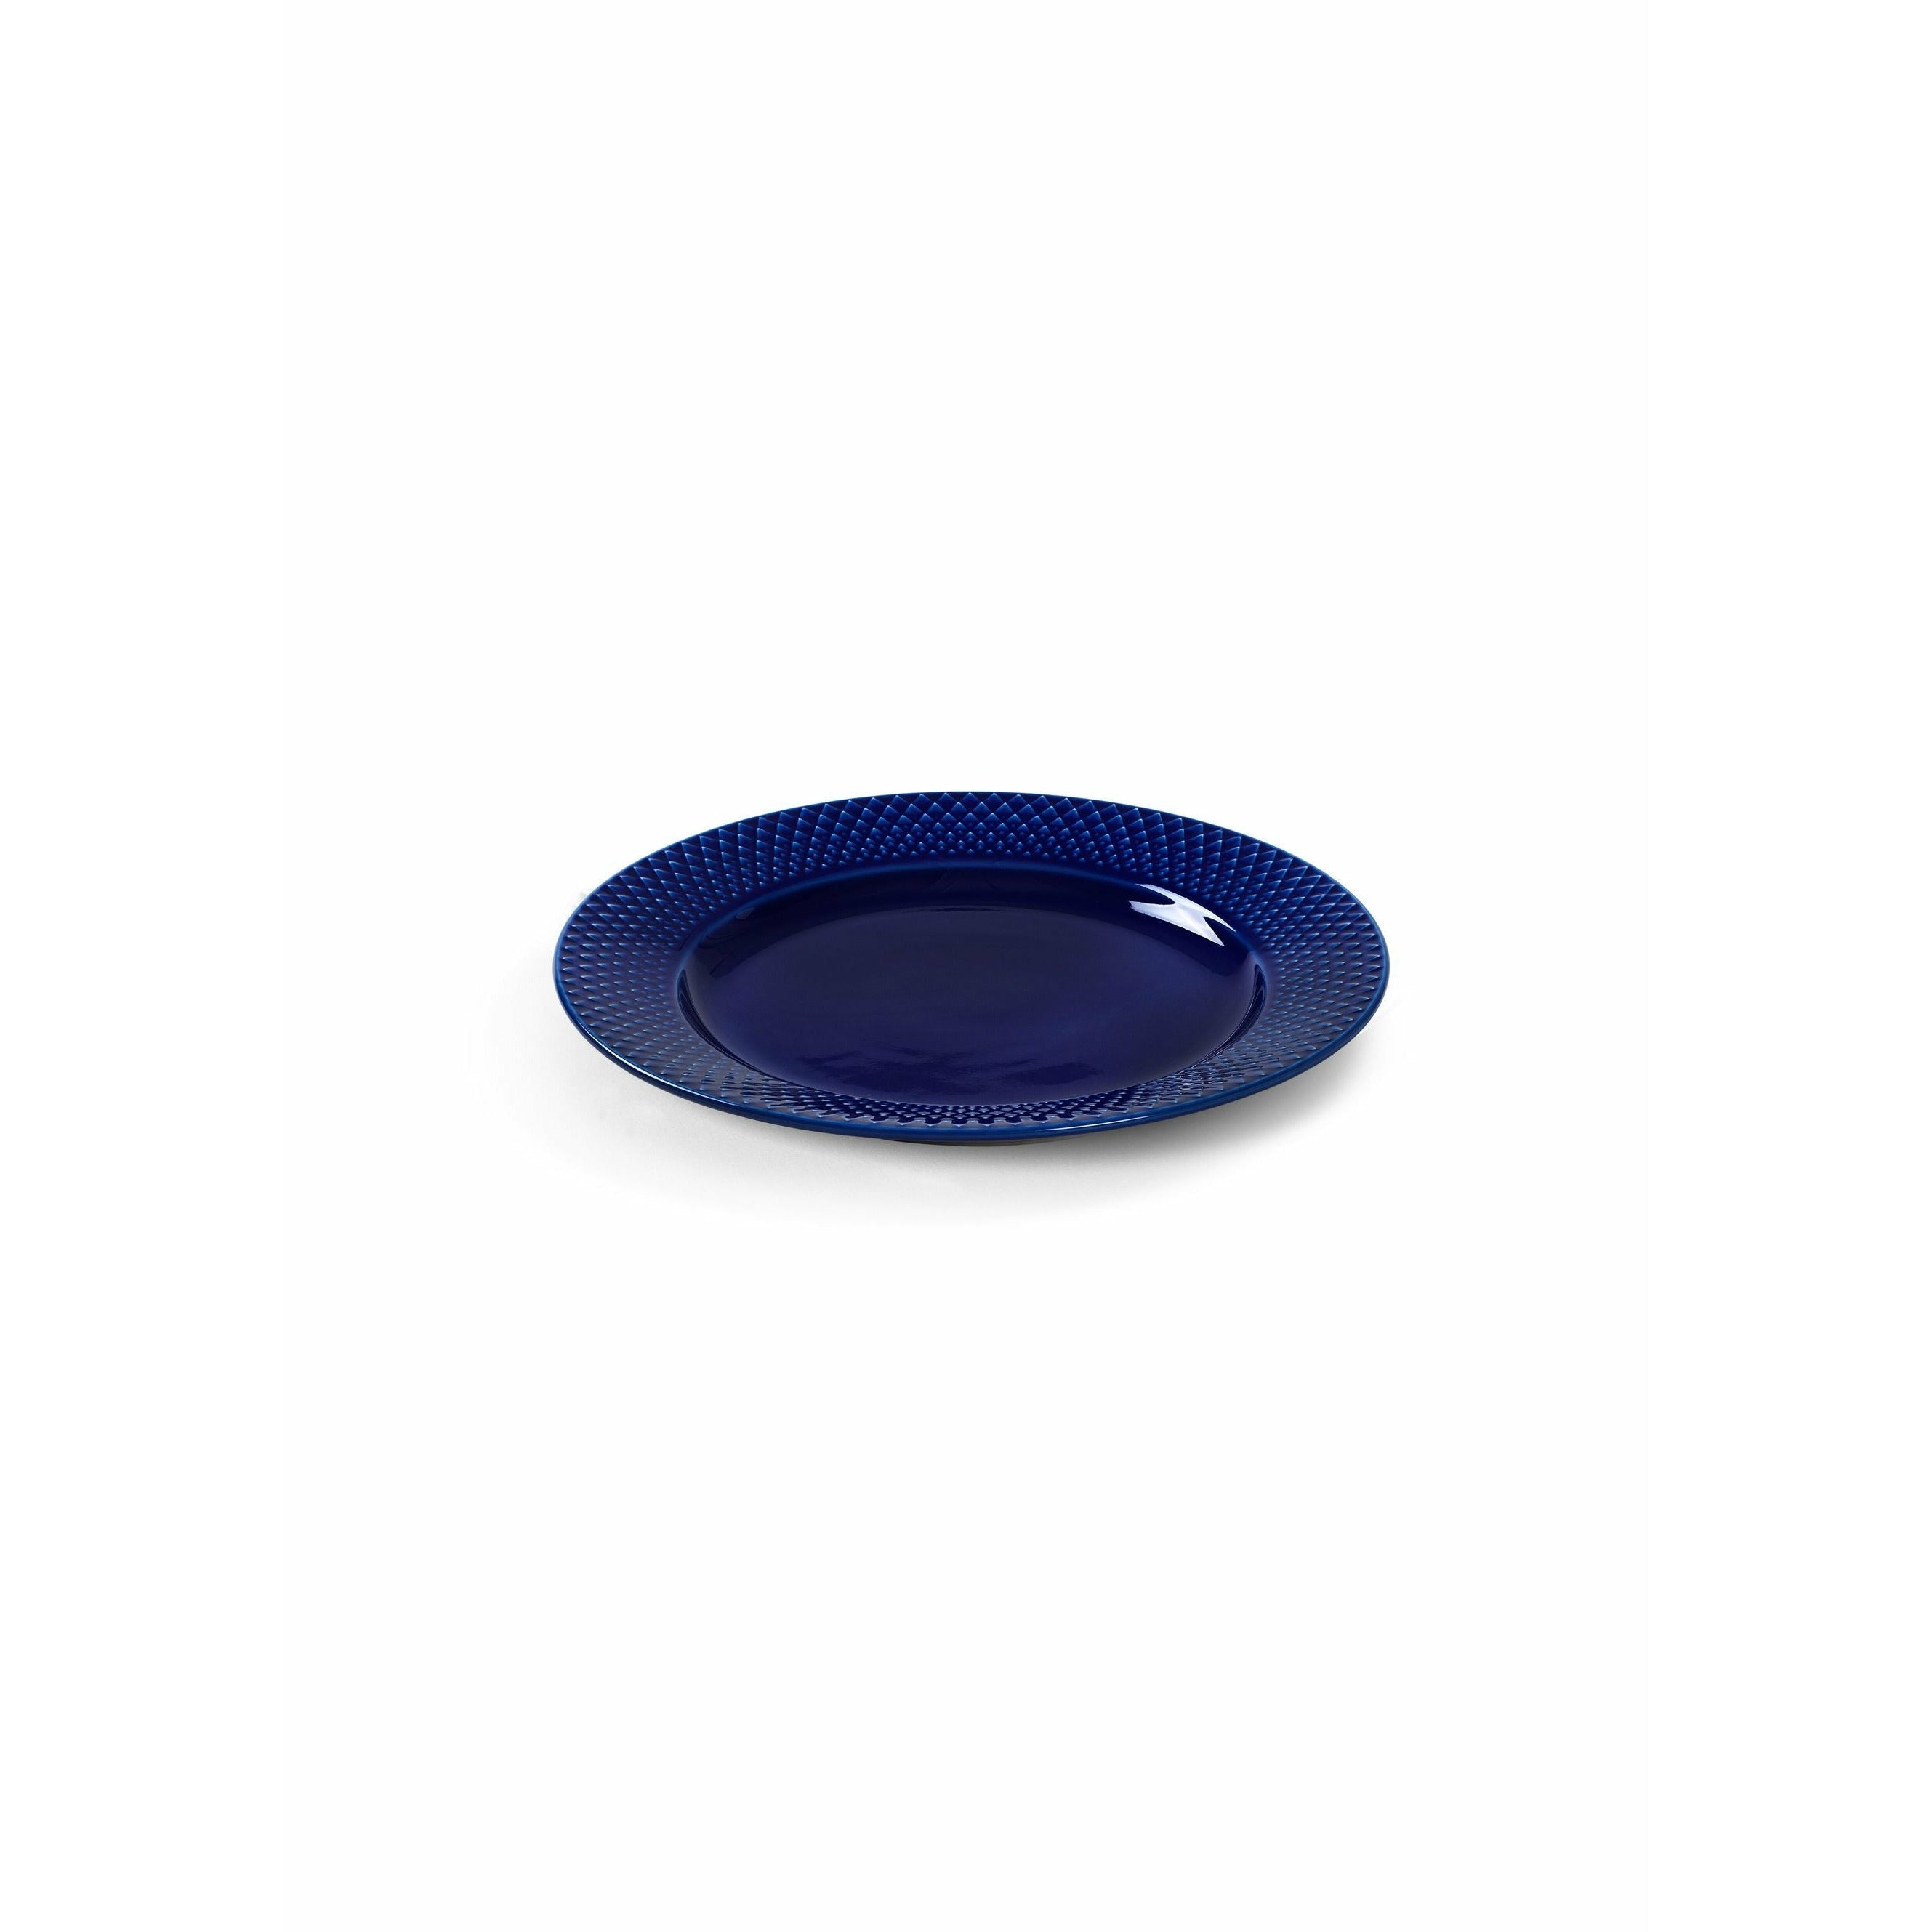 Lyngby Porcelæn Rhombe couleur plate plate Ø23 cm, bleu foncé